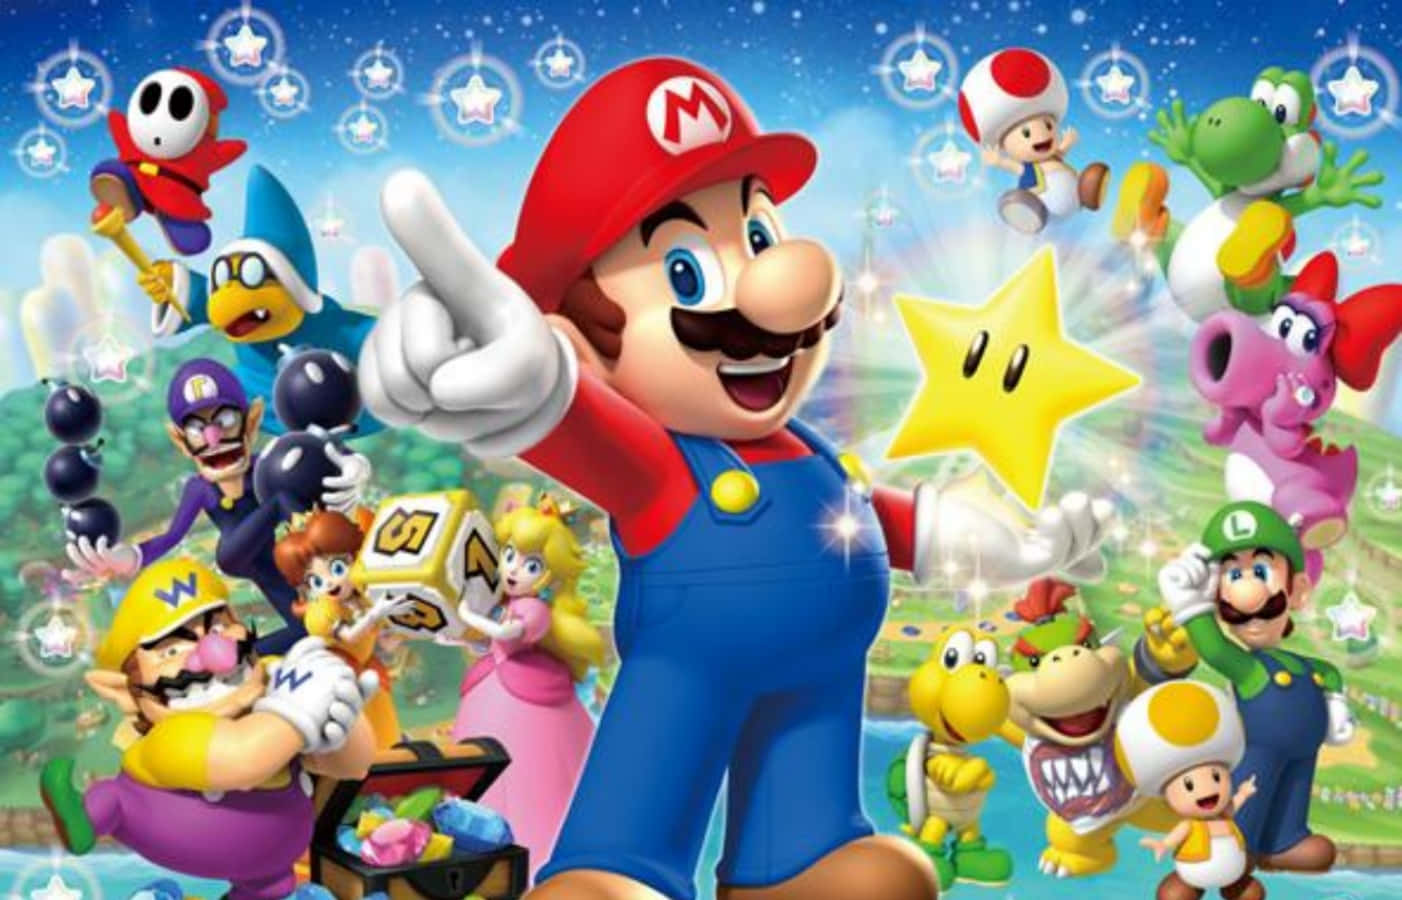 Popular Super Mario Characters on an Adventure Wallpaper